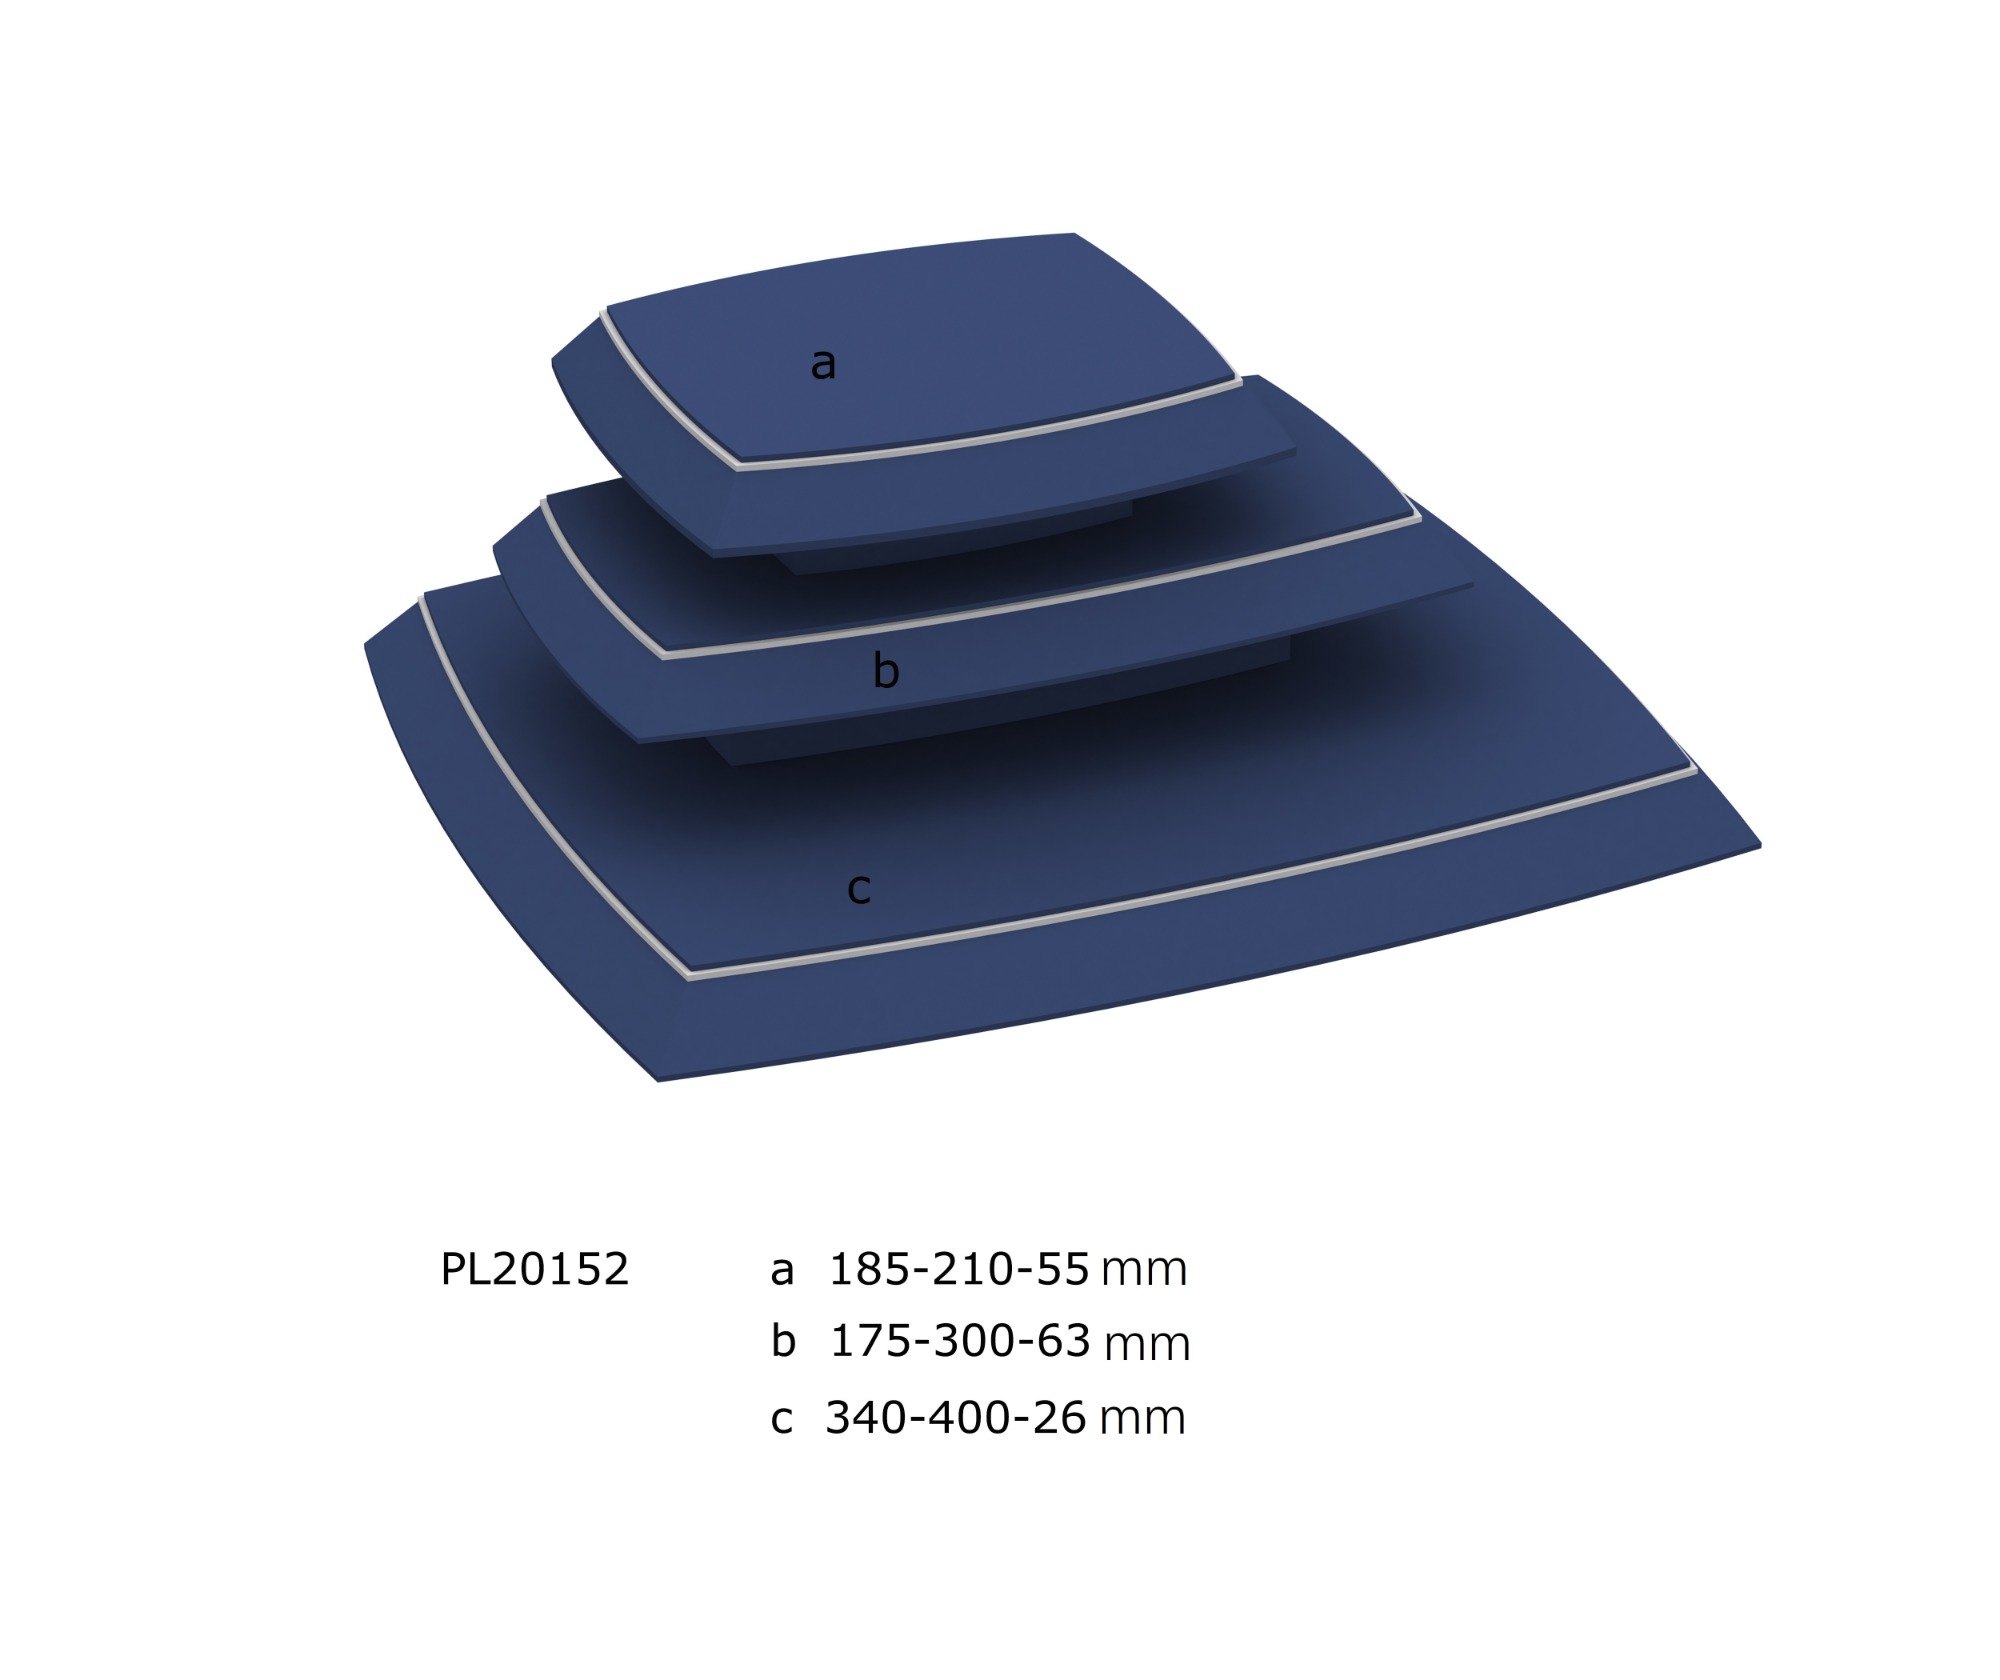 PL20152 Floating Modelling Jewelry Display Base, Bases, Bases Set